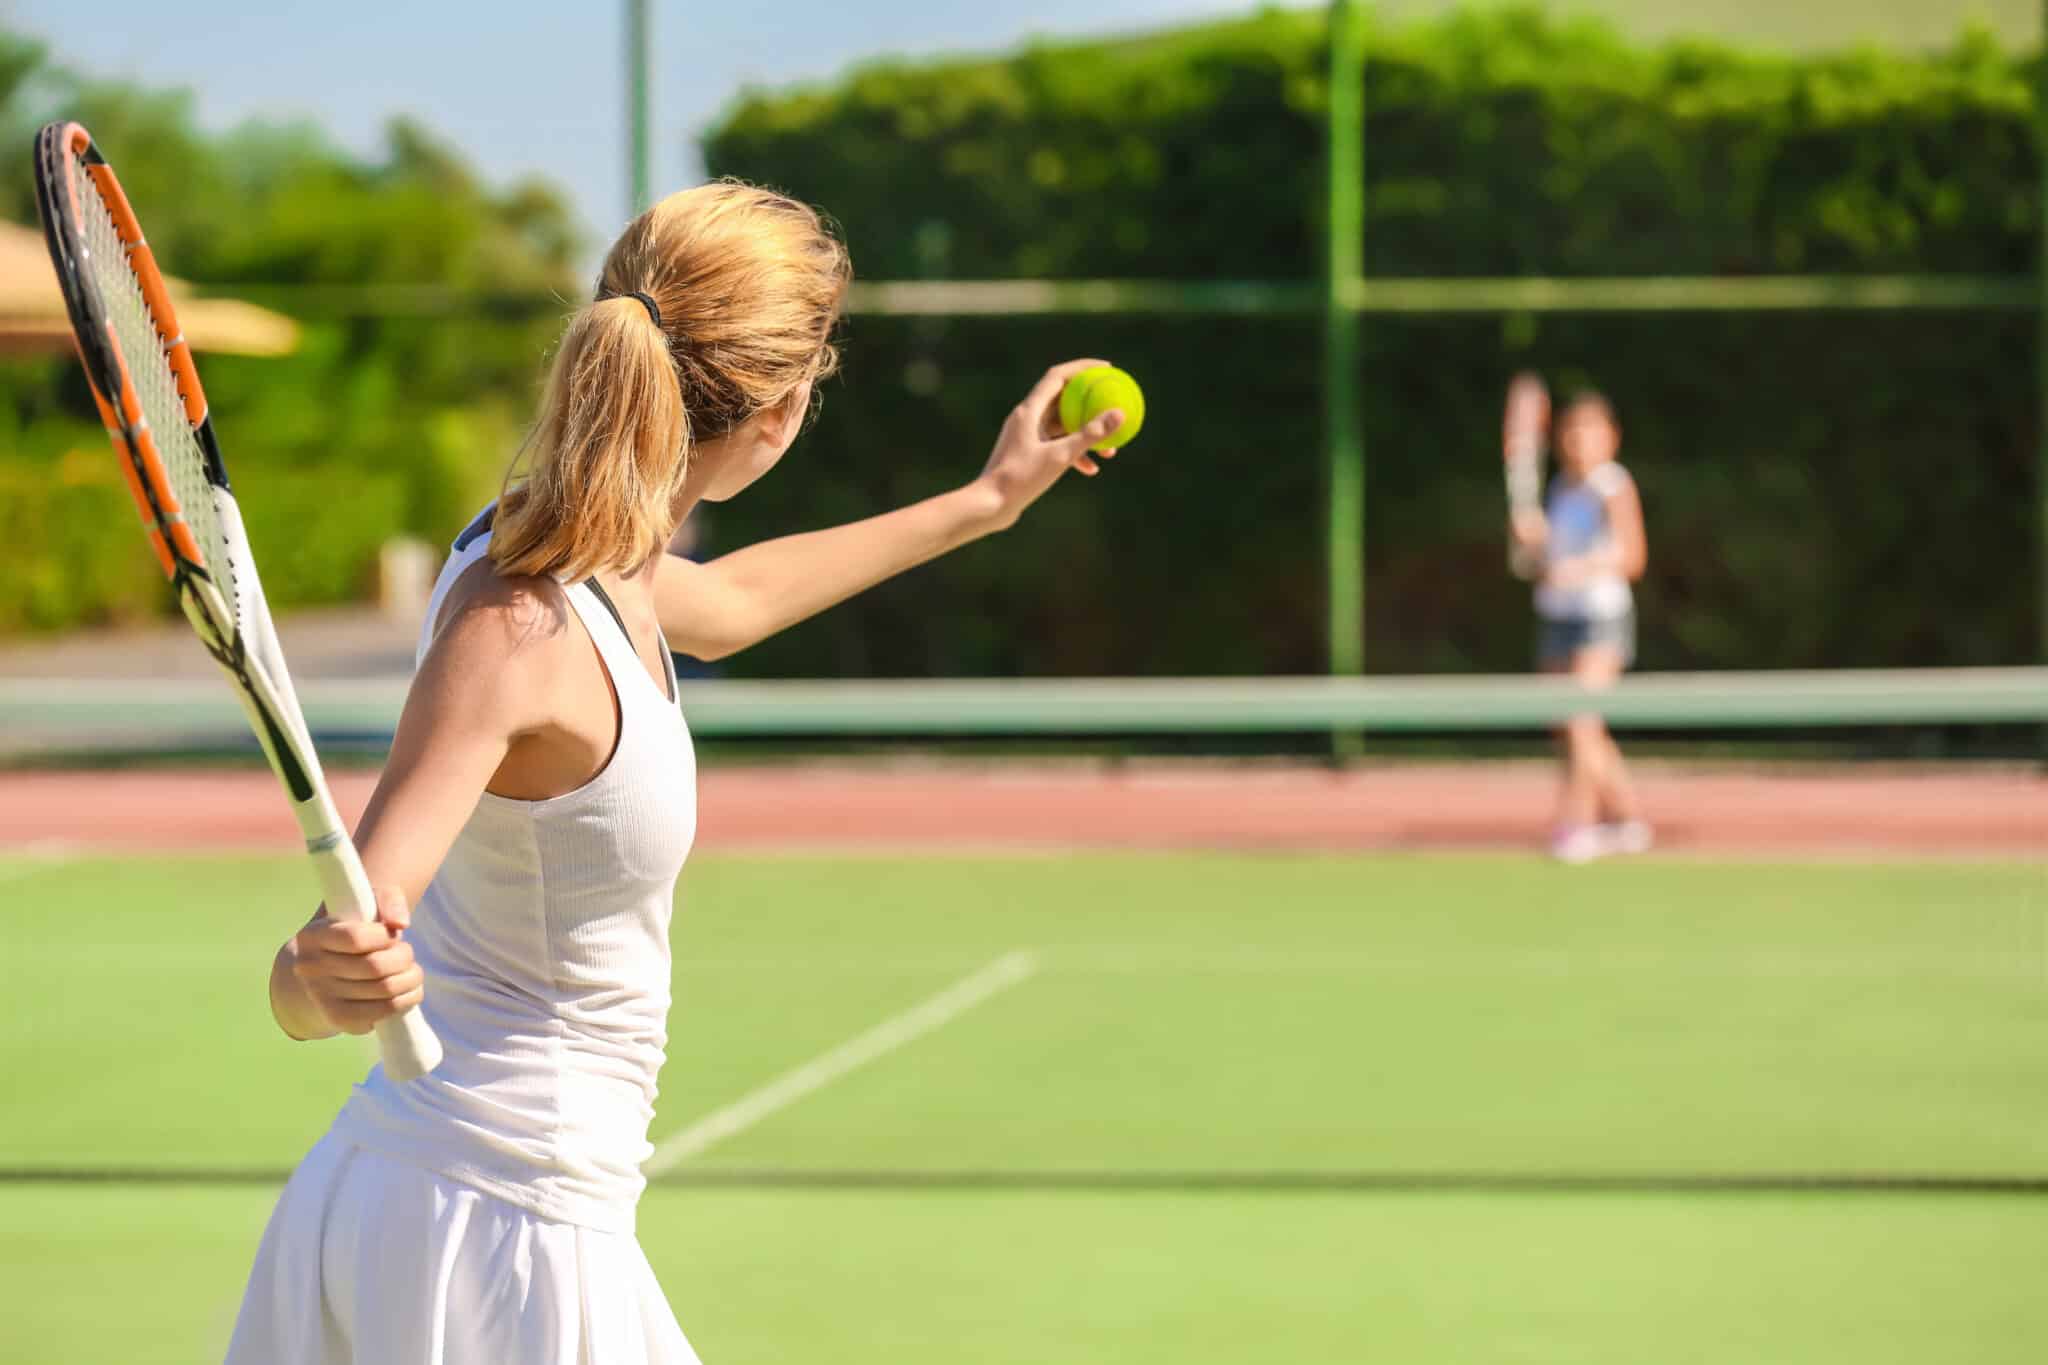 Woman serving during a tennis match